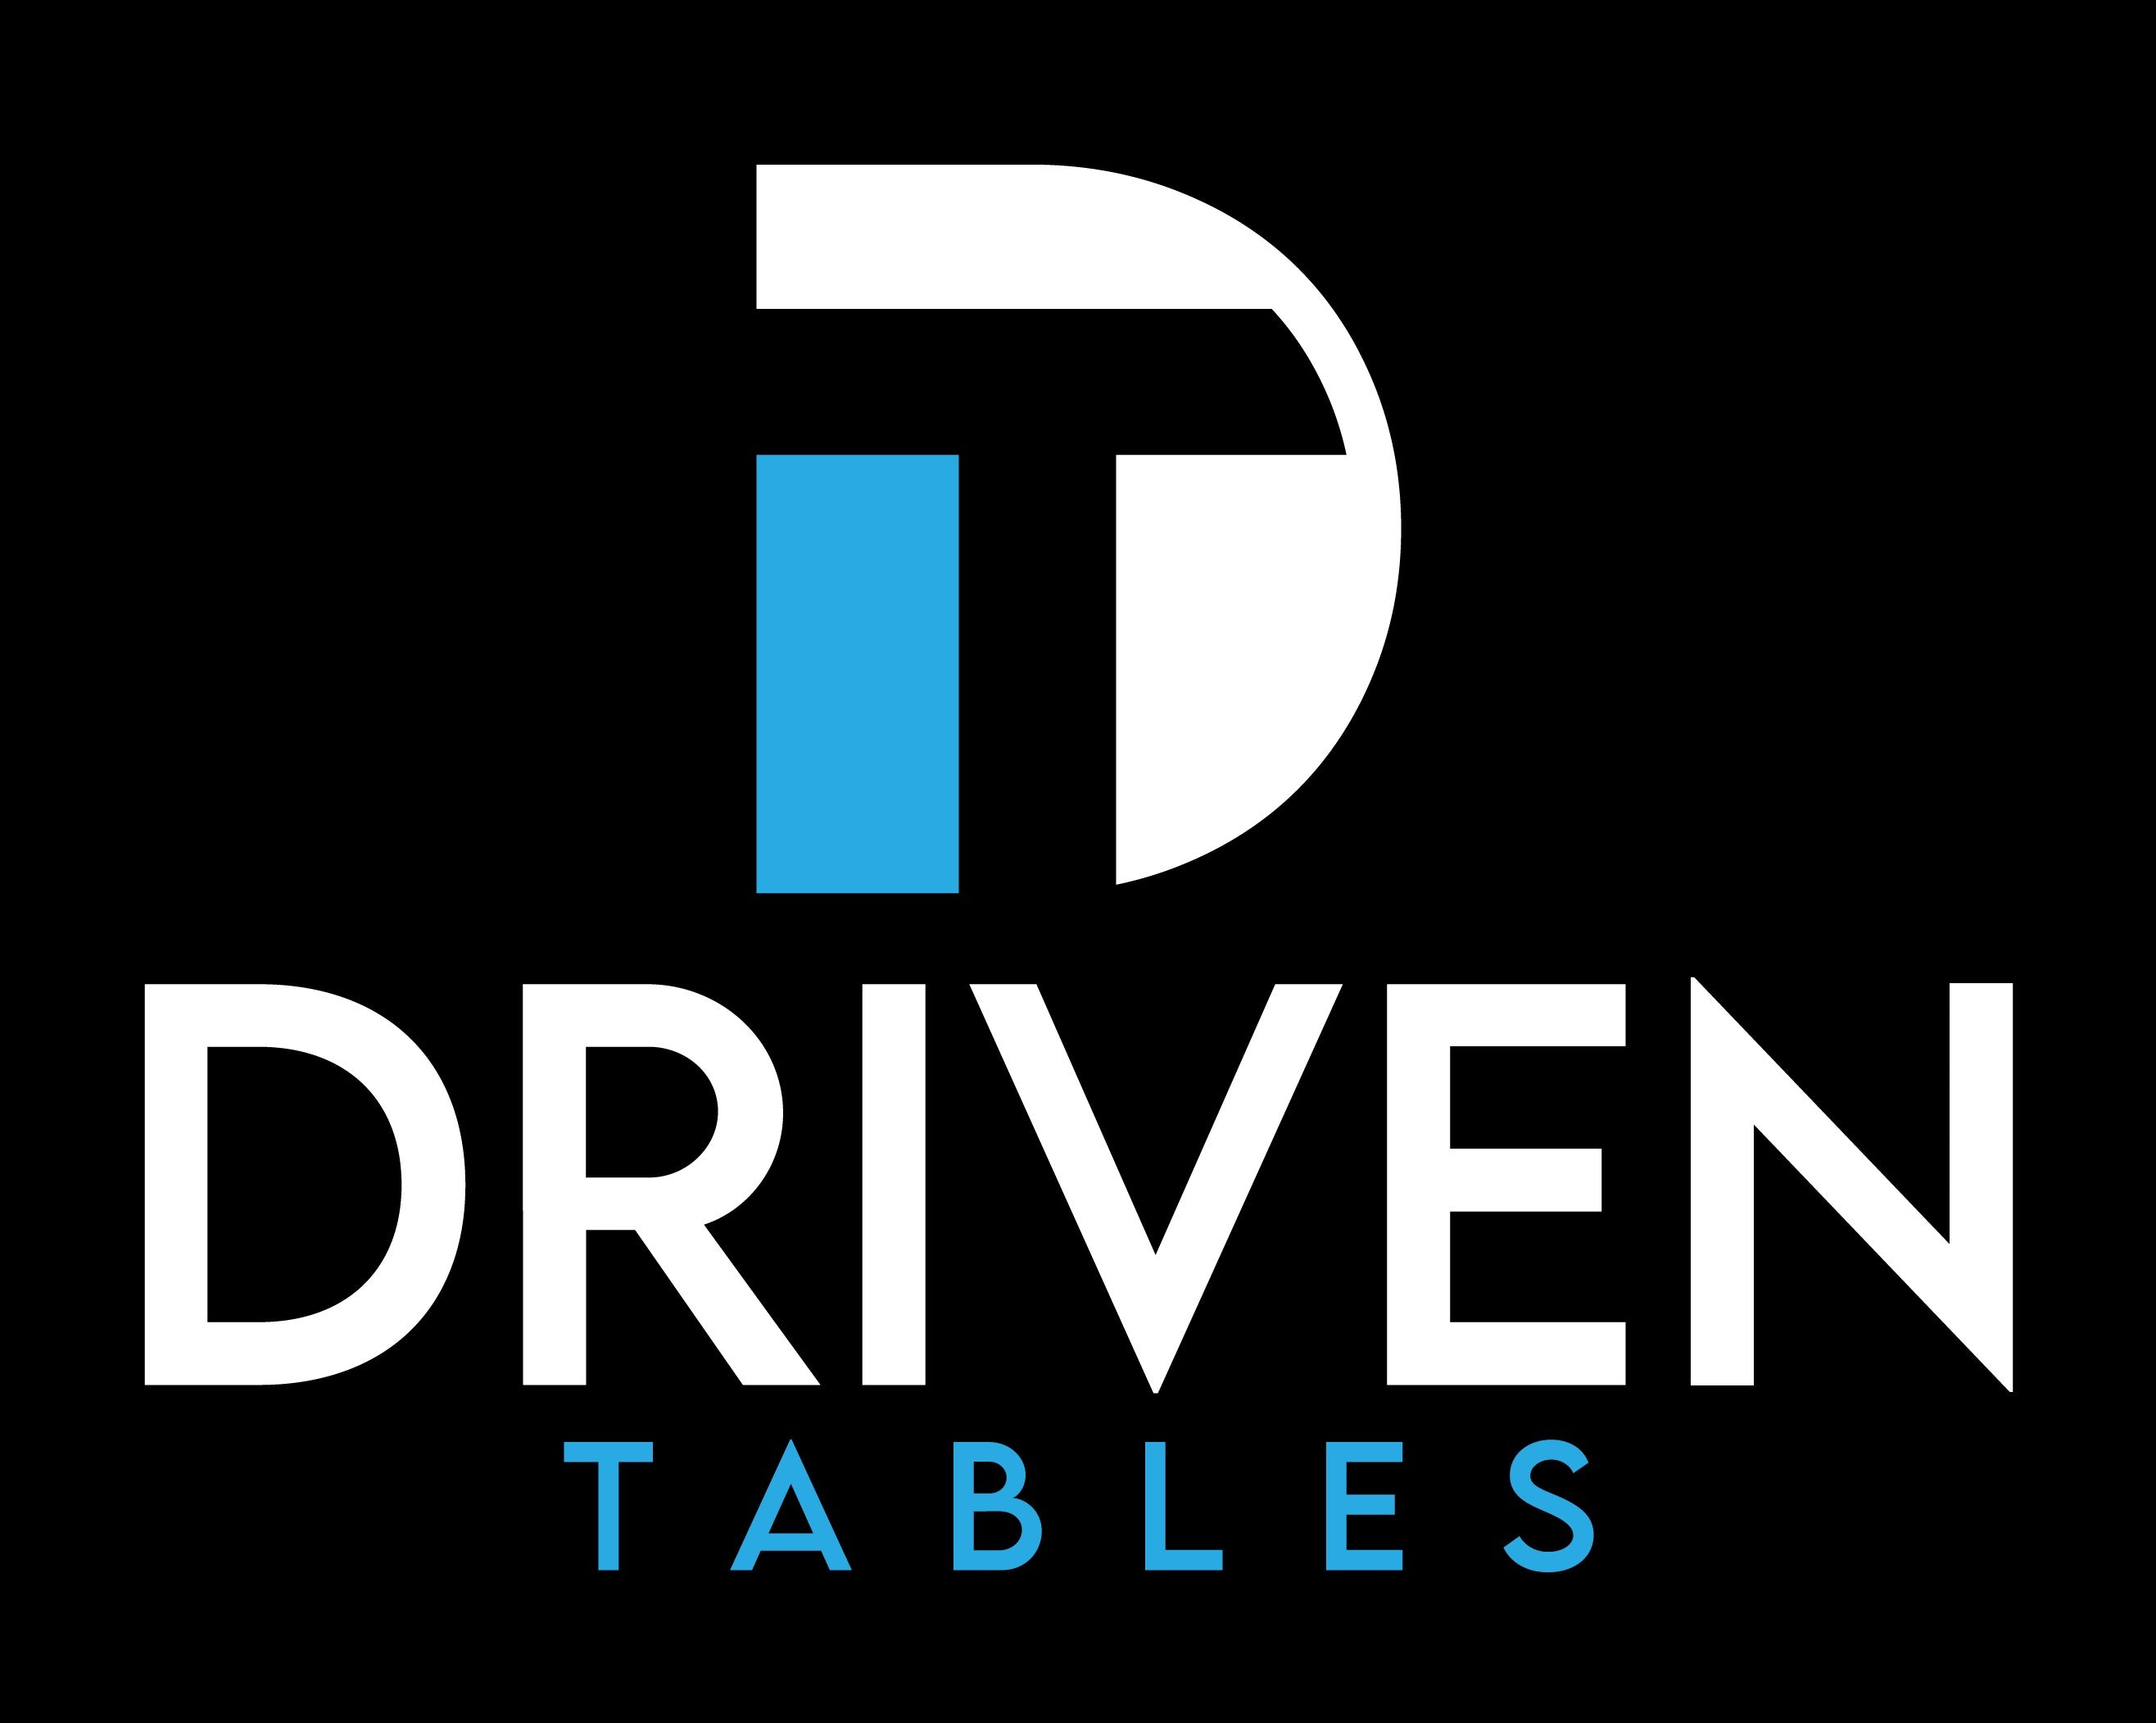 Driven Tables